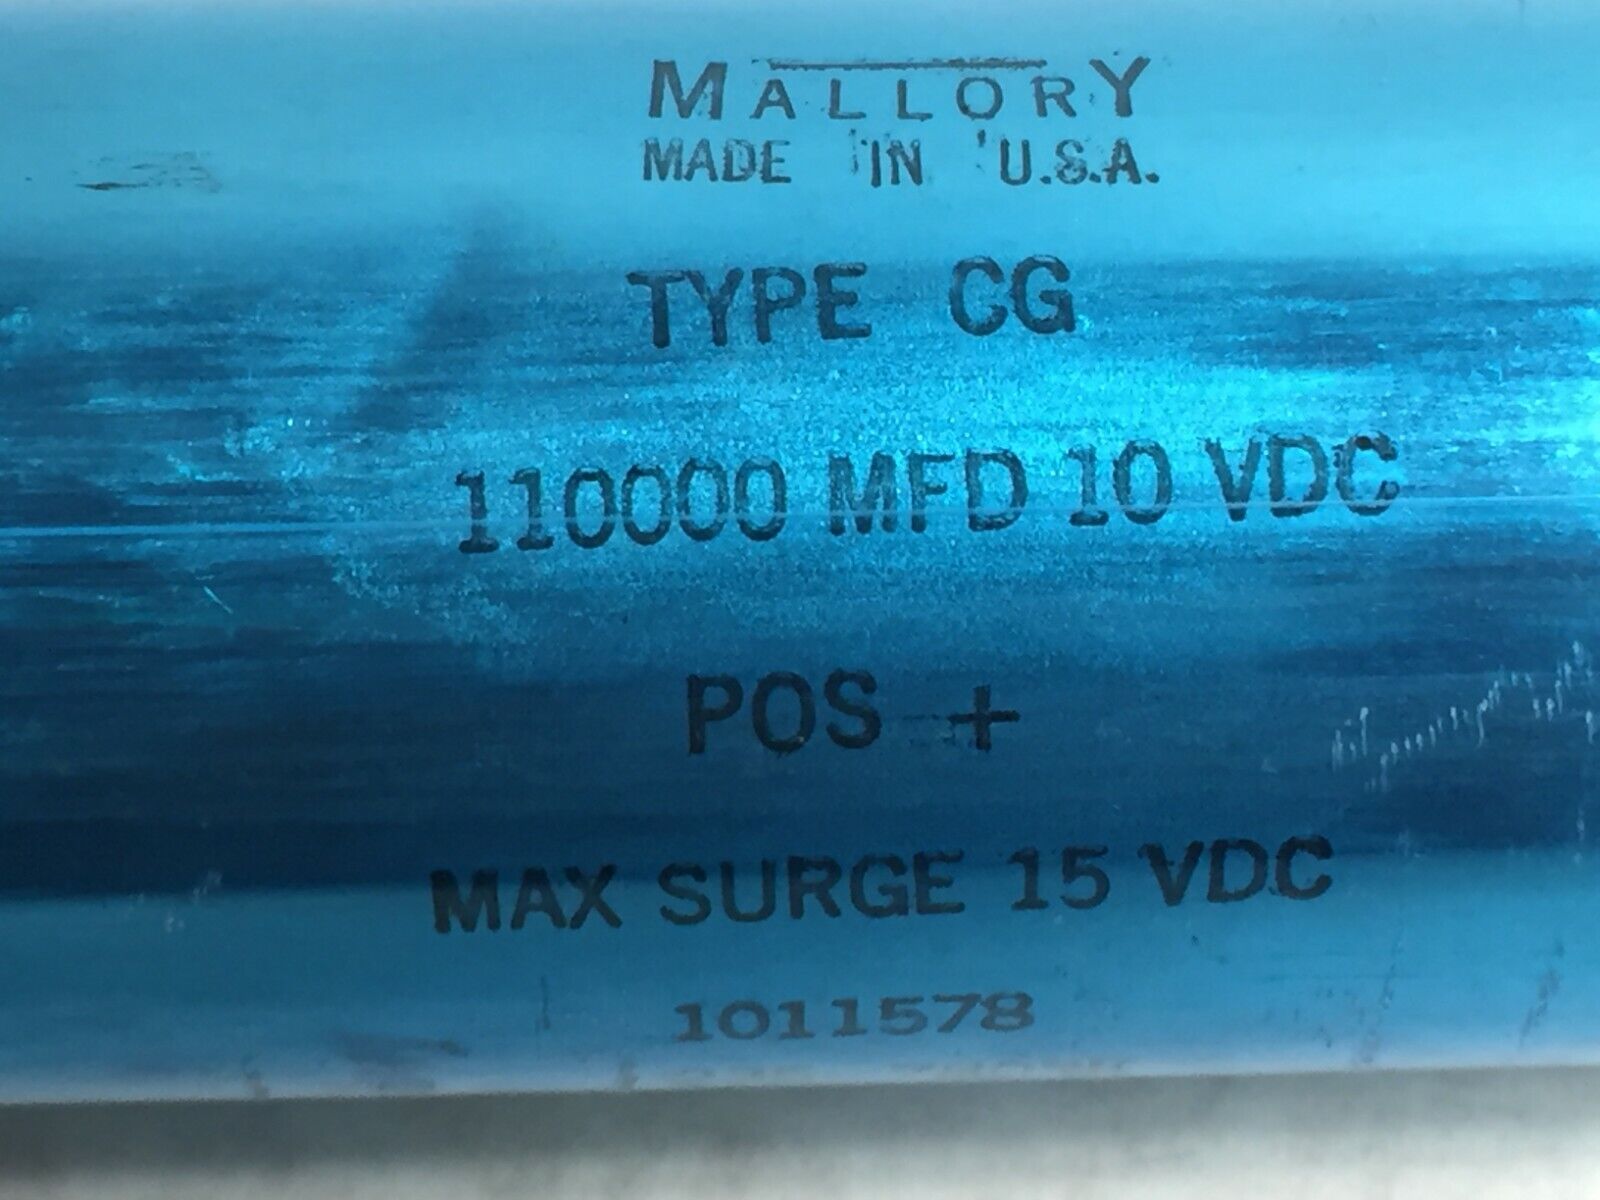 NOS Mallory Type CG 110000MFD 10VDC Max Surge 15VDC 1011578 235-7803K Capacitor